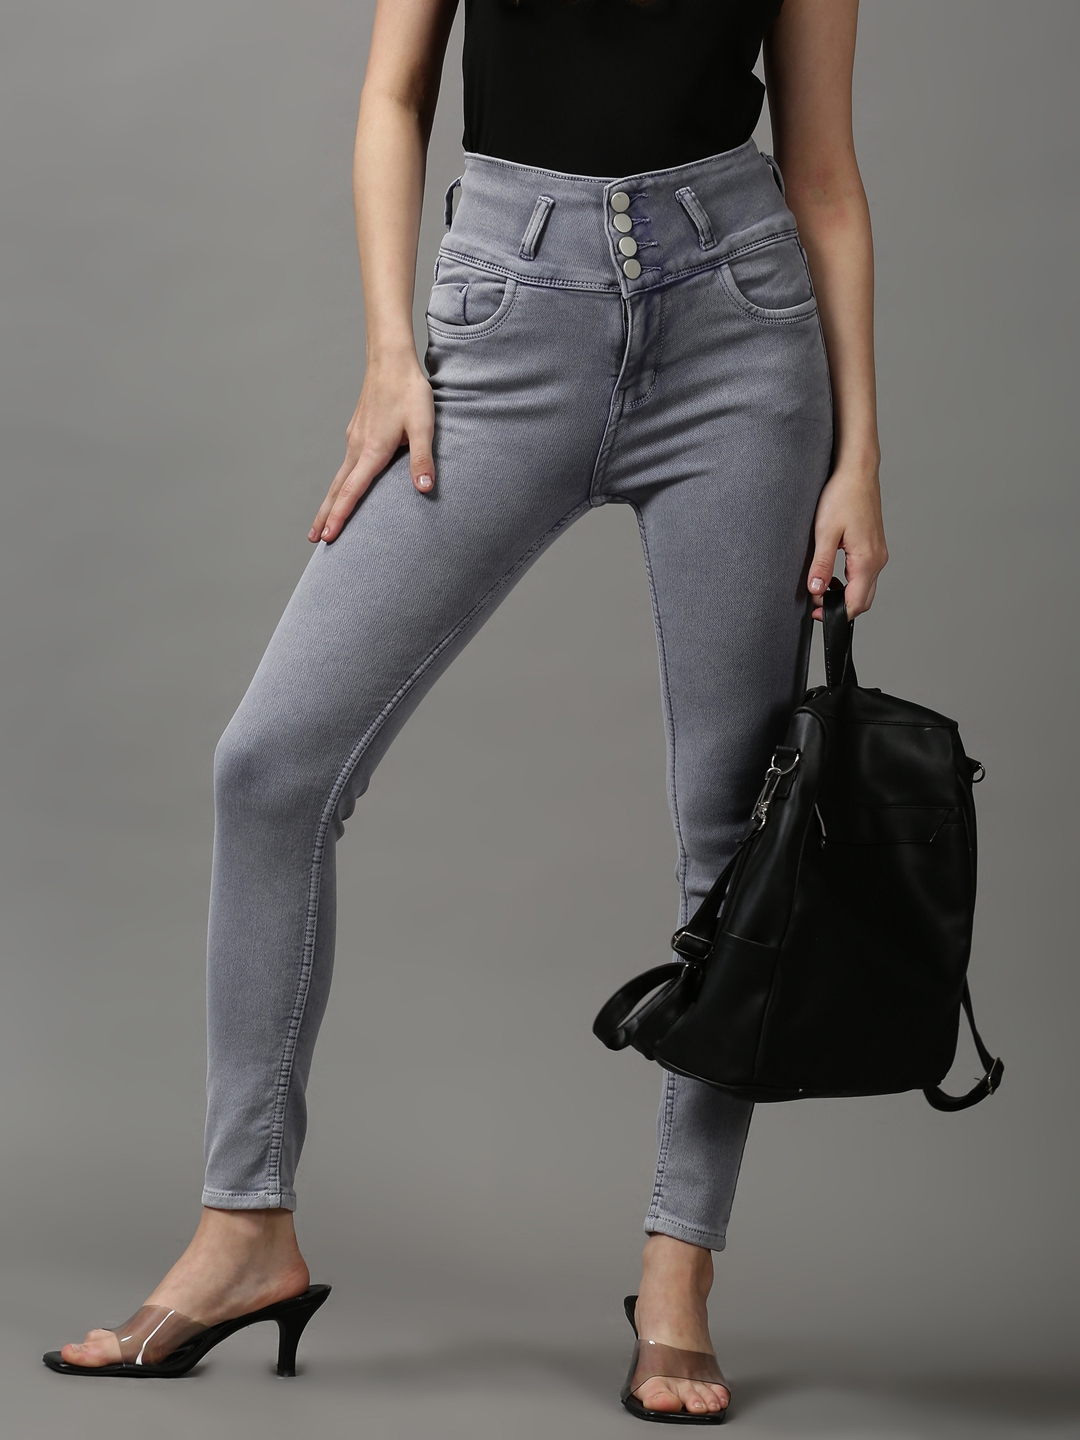 Showoff | SHOWOFF Women's Clean Look Skinny Fit Grey Denim Jeans